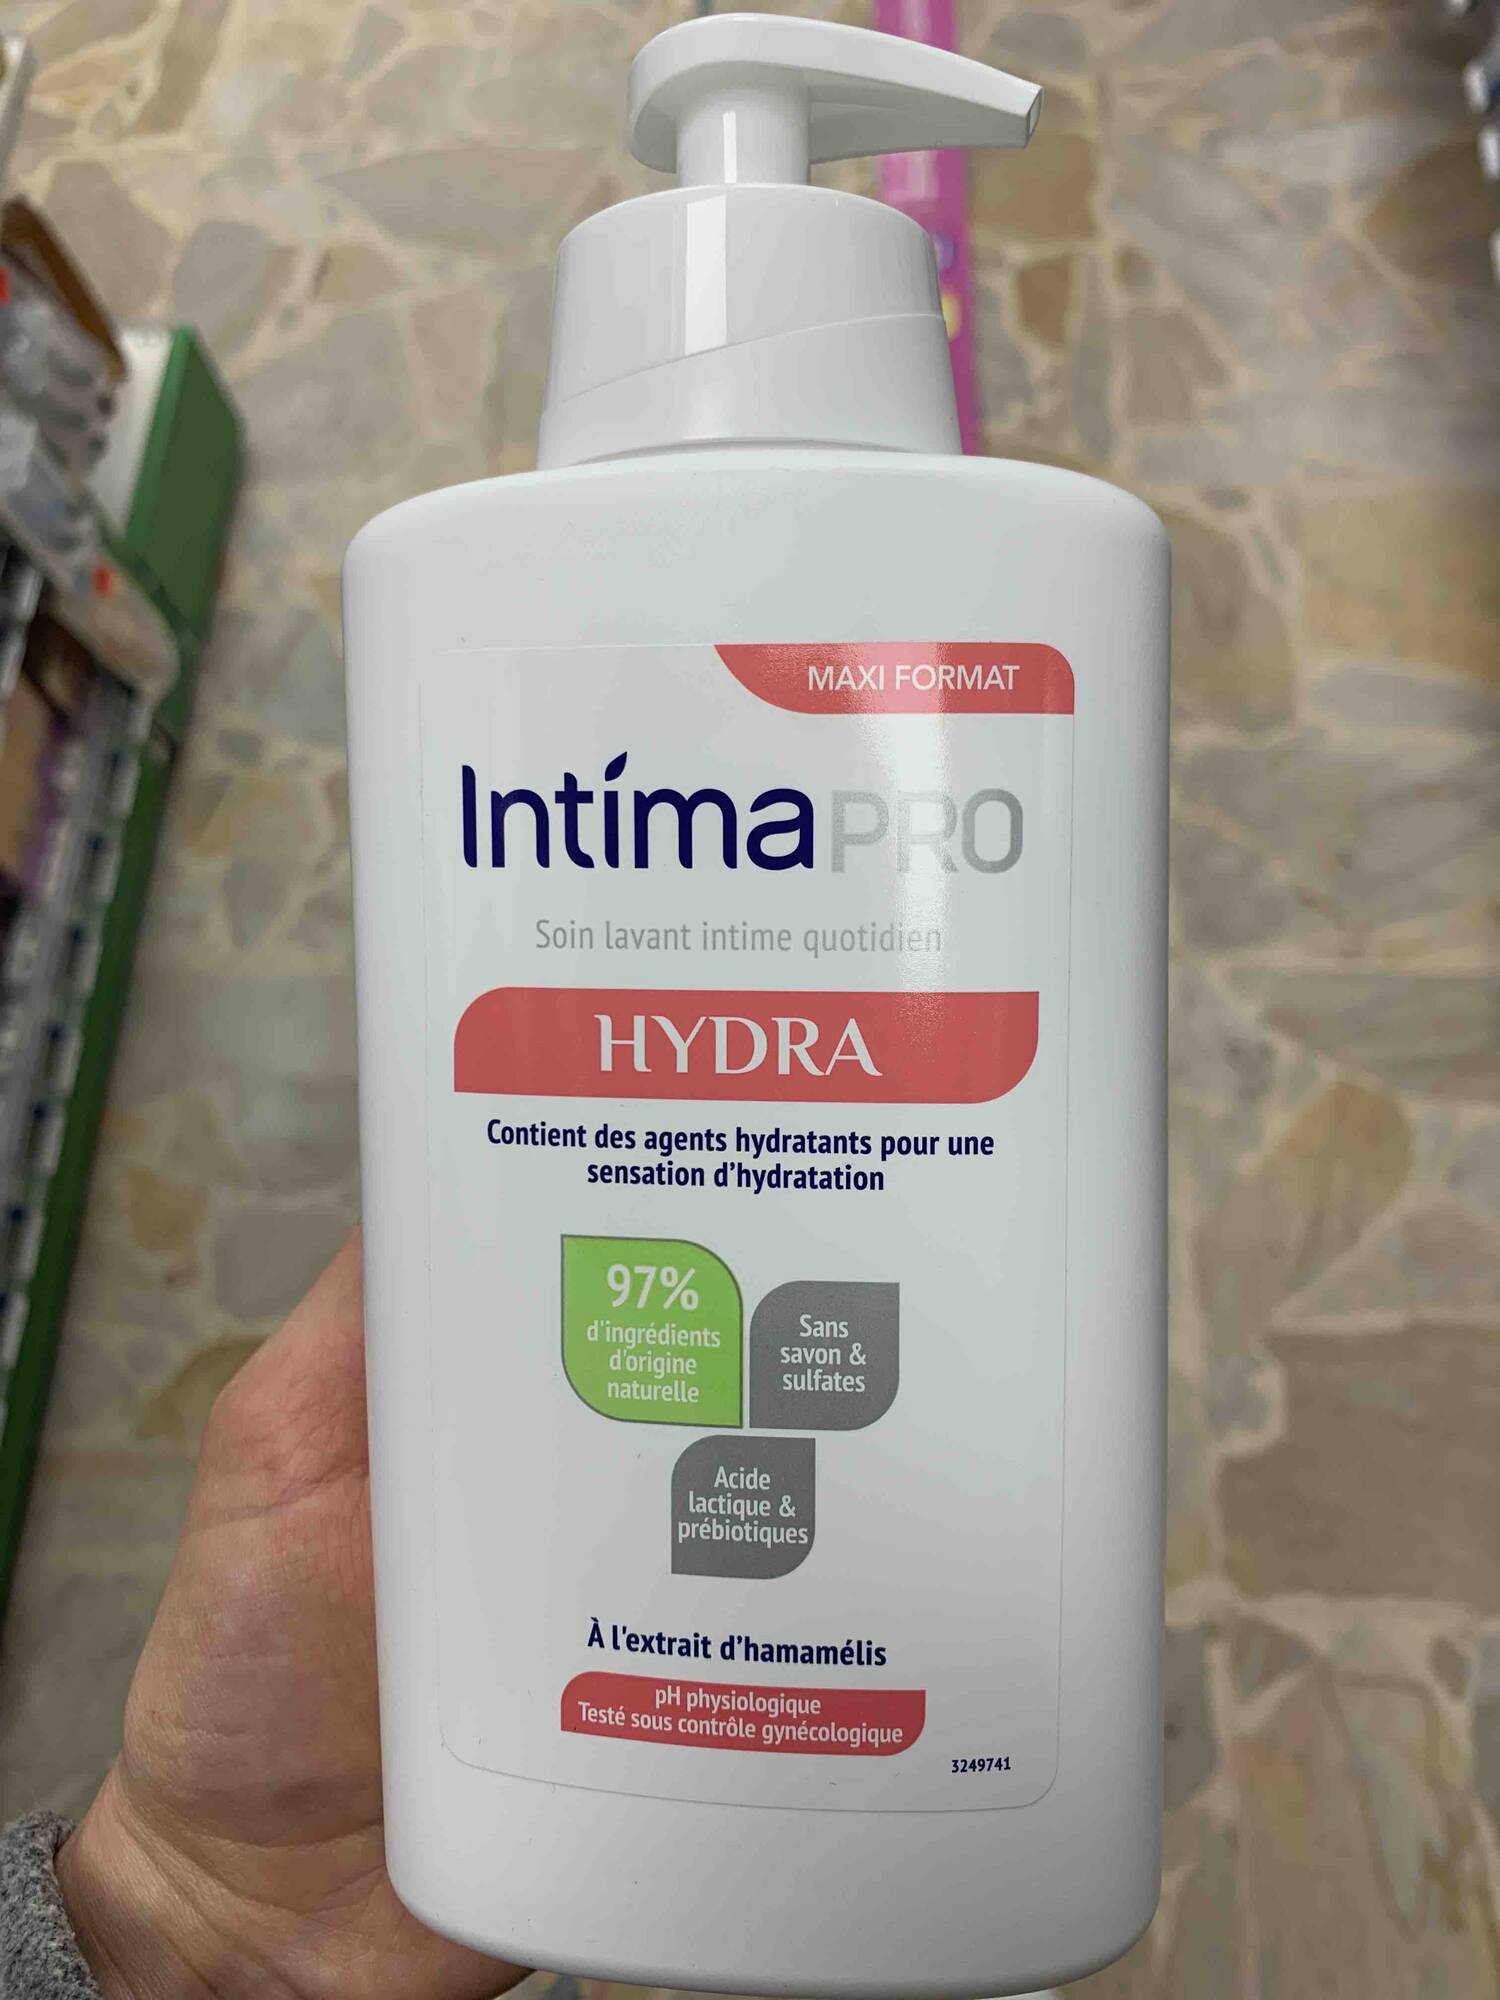 INTIMA PRO - Hydra - Soin lavant intime quotidien